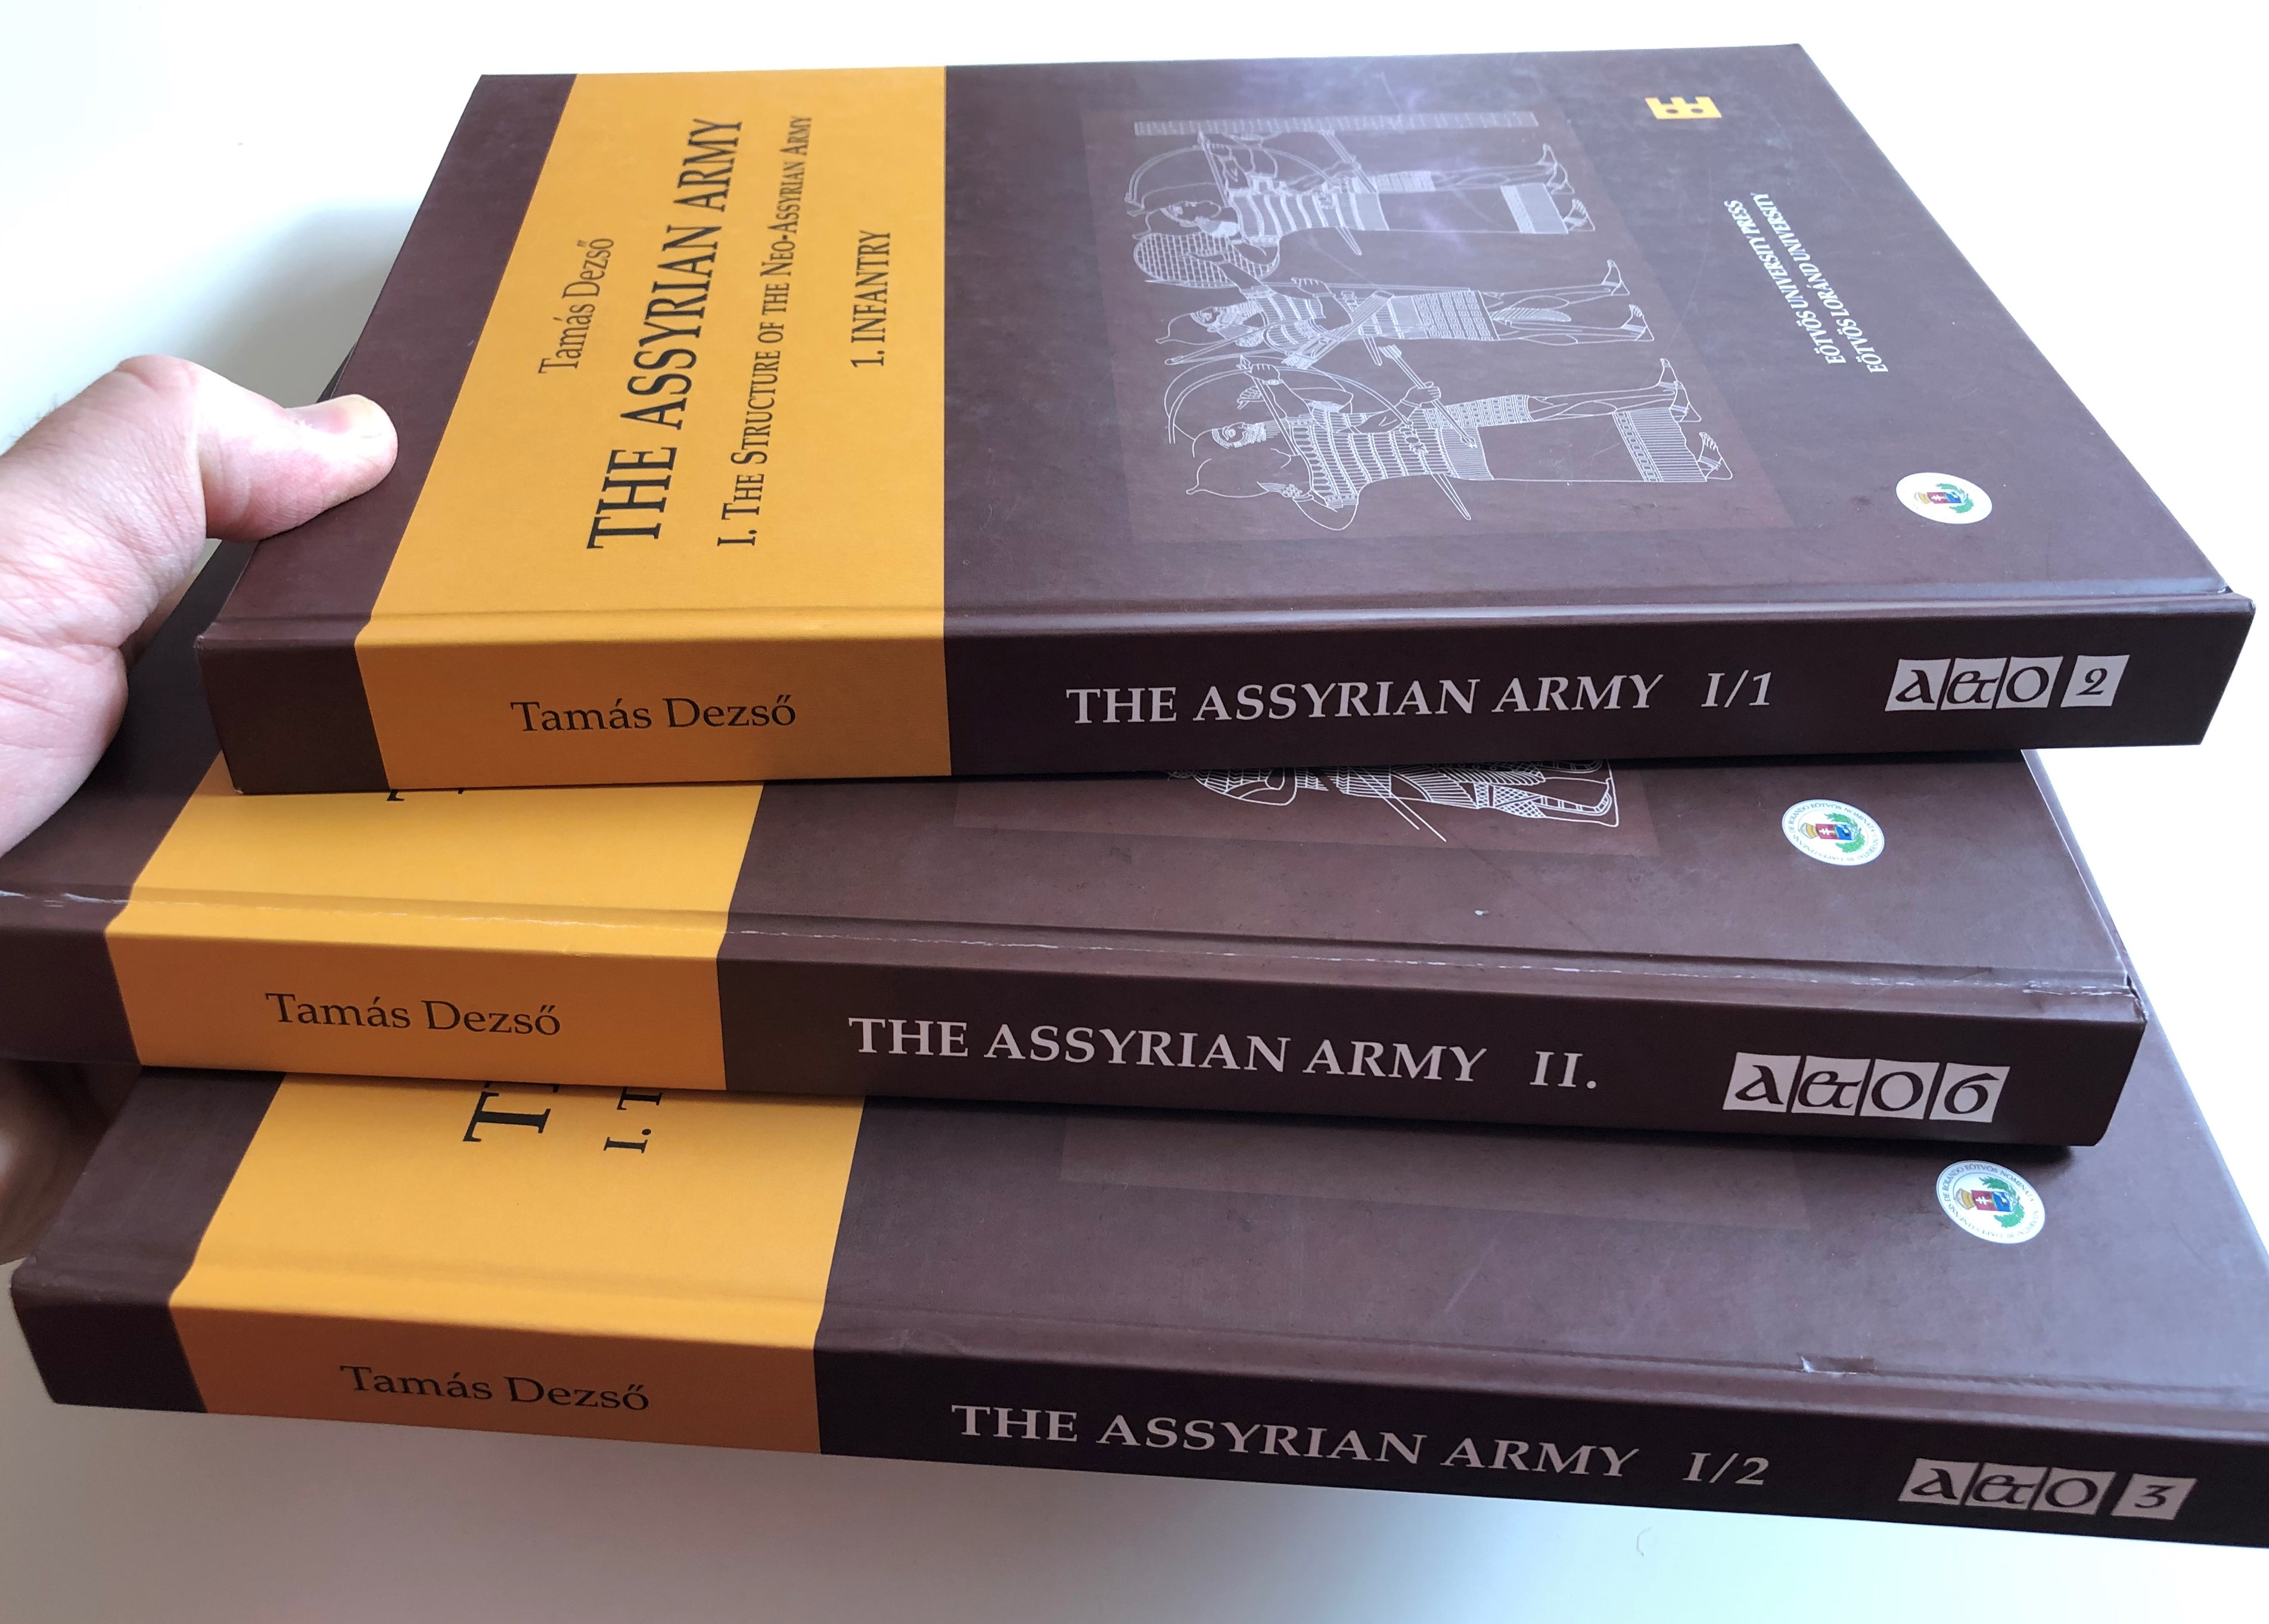 The Assyrian Army by Tamás Dezső Book Set - 3 Volumes 1.JPG